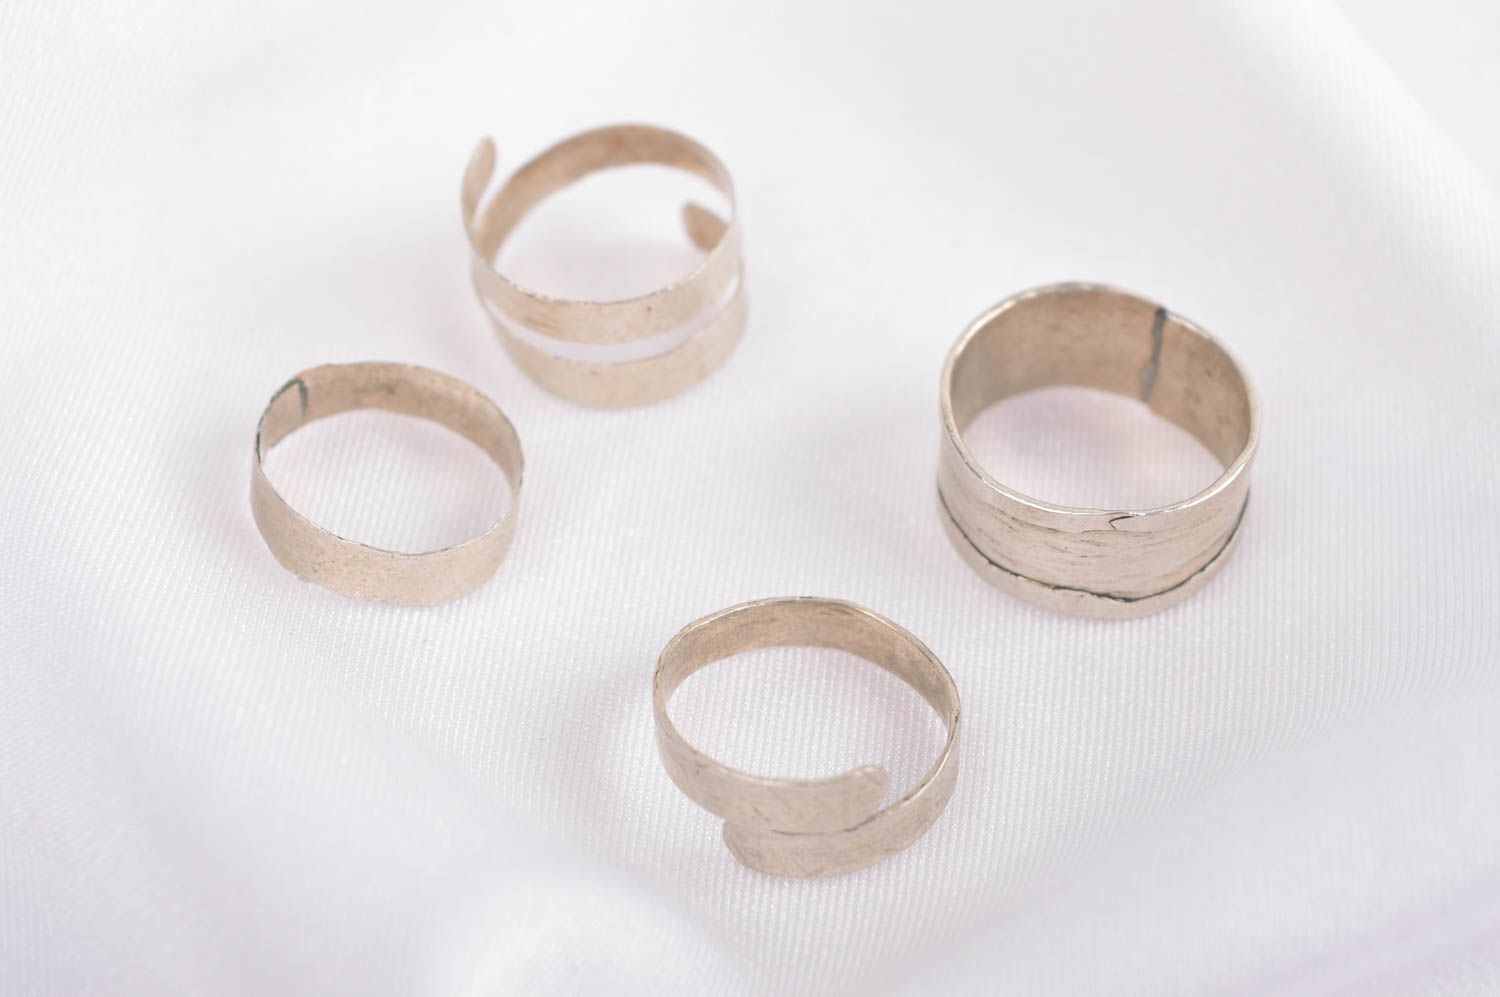 Handmade female stylish rings unusual elegant rings metal jewelry 4 pieces photo 1